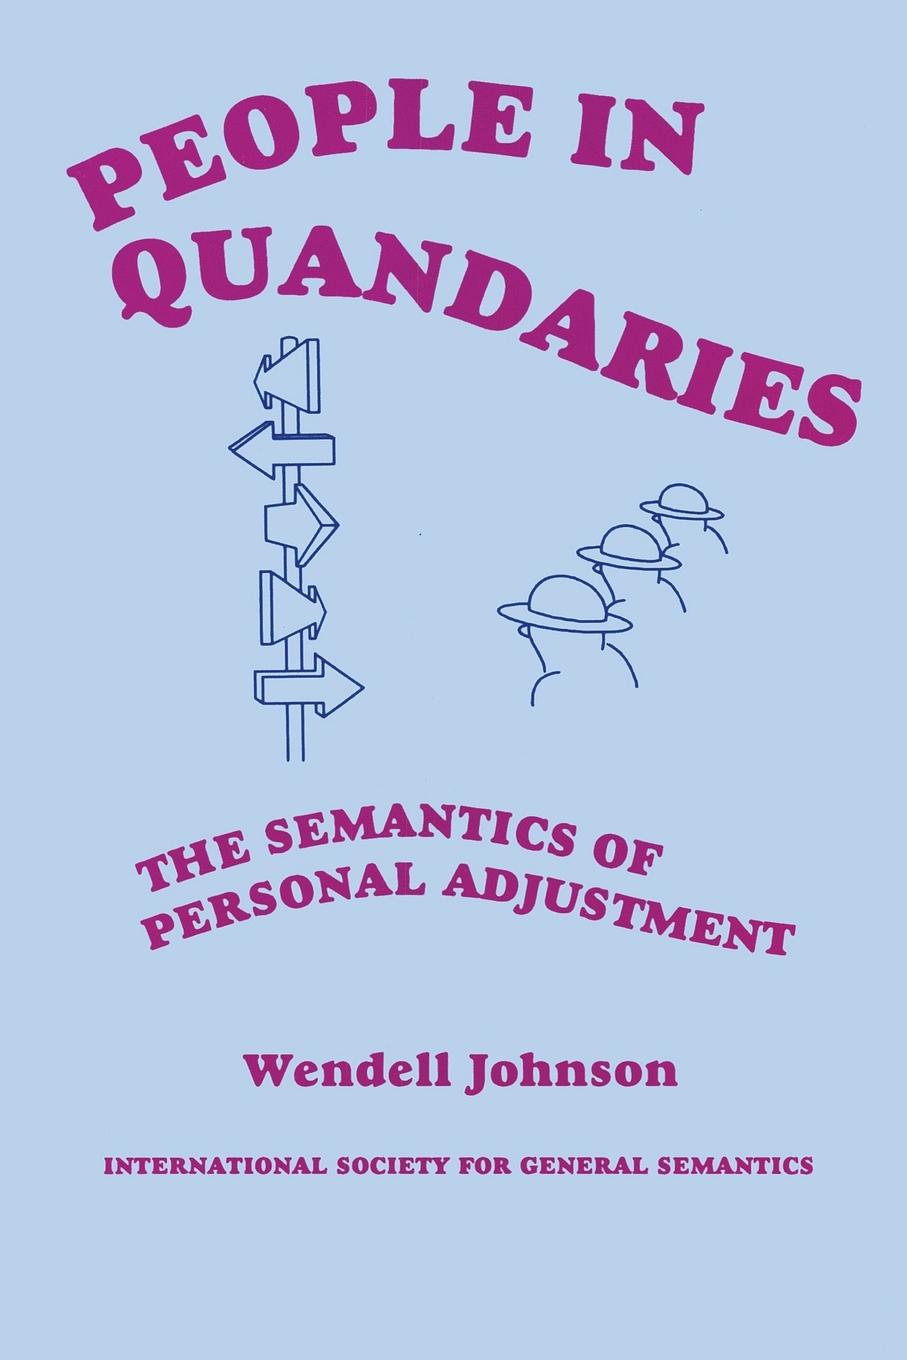 PDF Version: People in Quandaries: The Semantics of Personal Adjustment